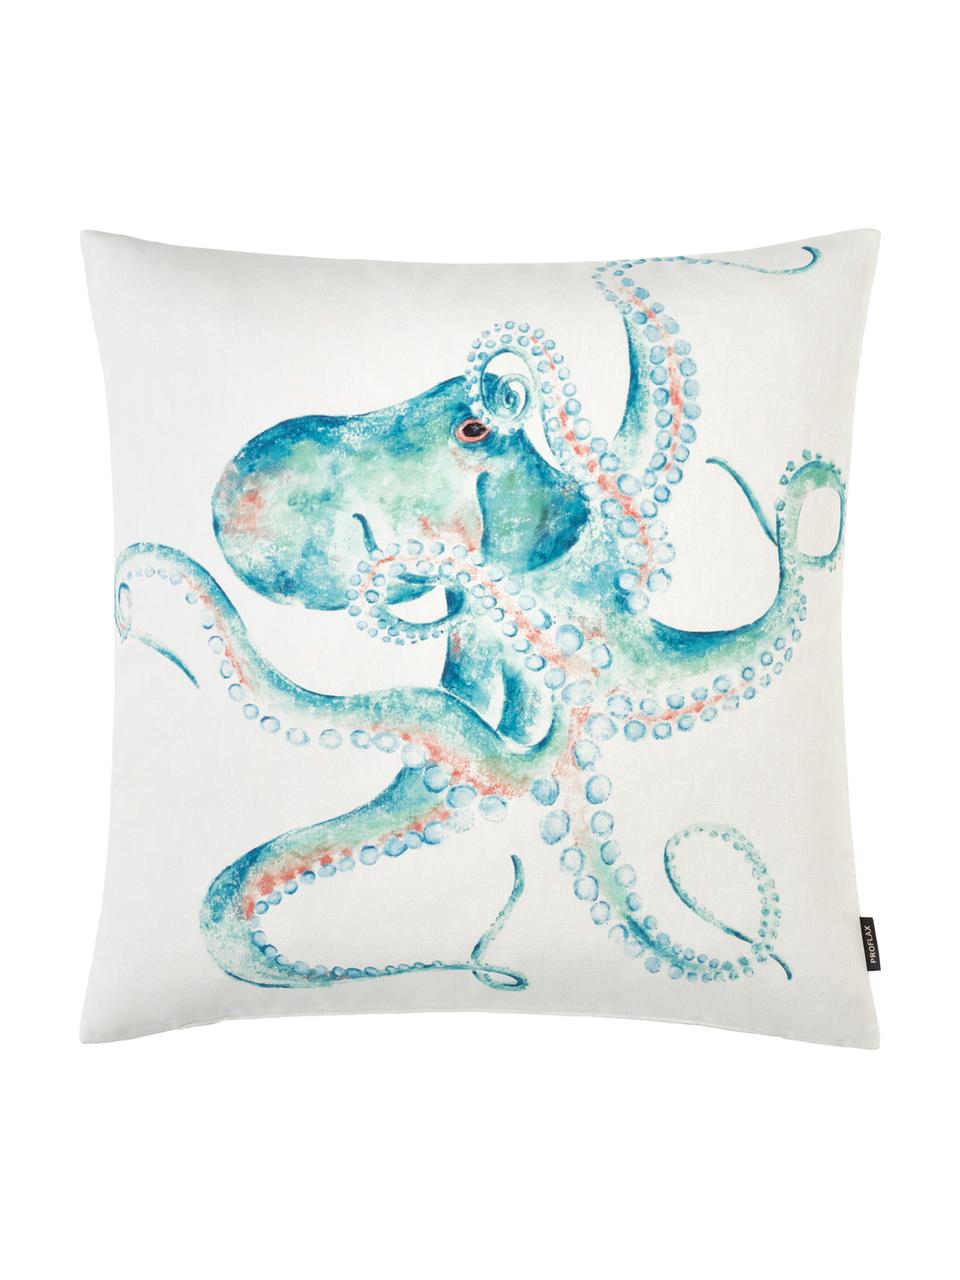 Kussenhoes Octopus, Katoen, Wit, turquoise, rood, 50 x 50 cm